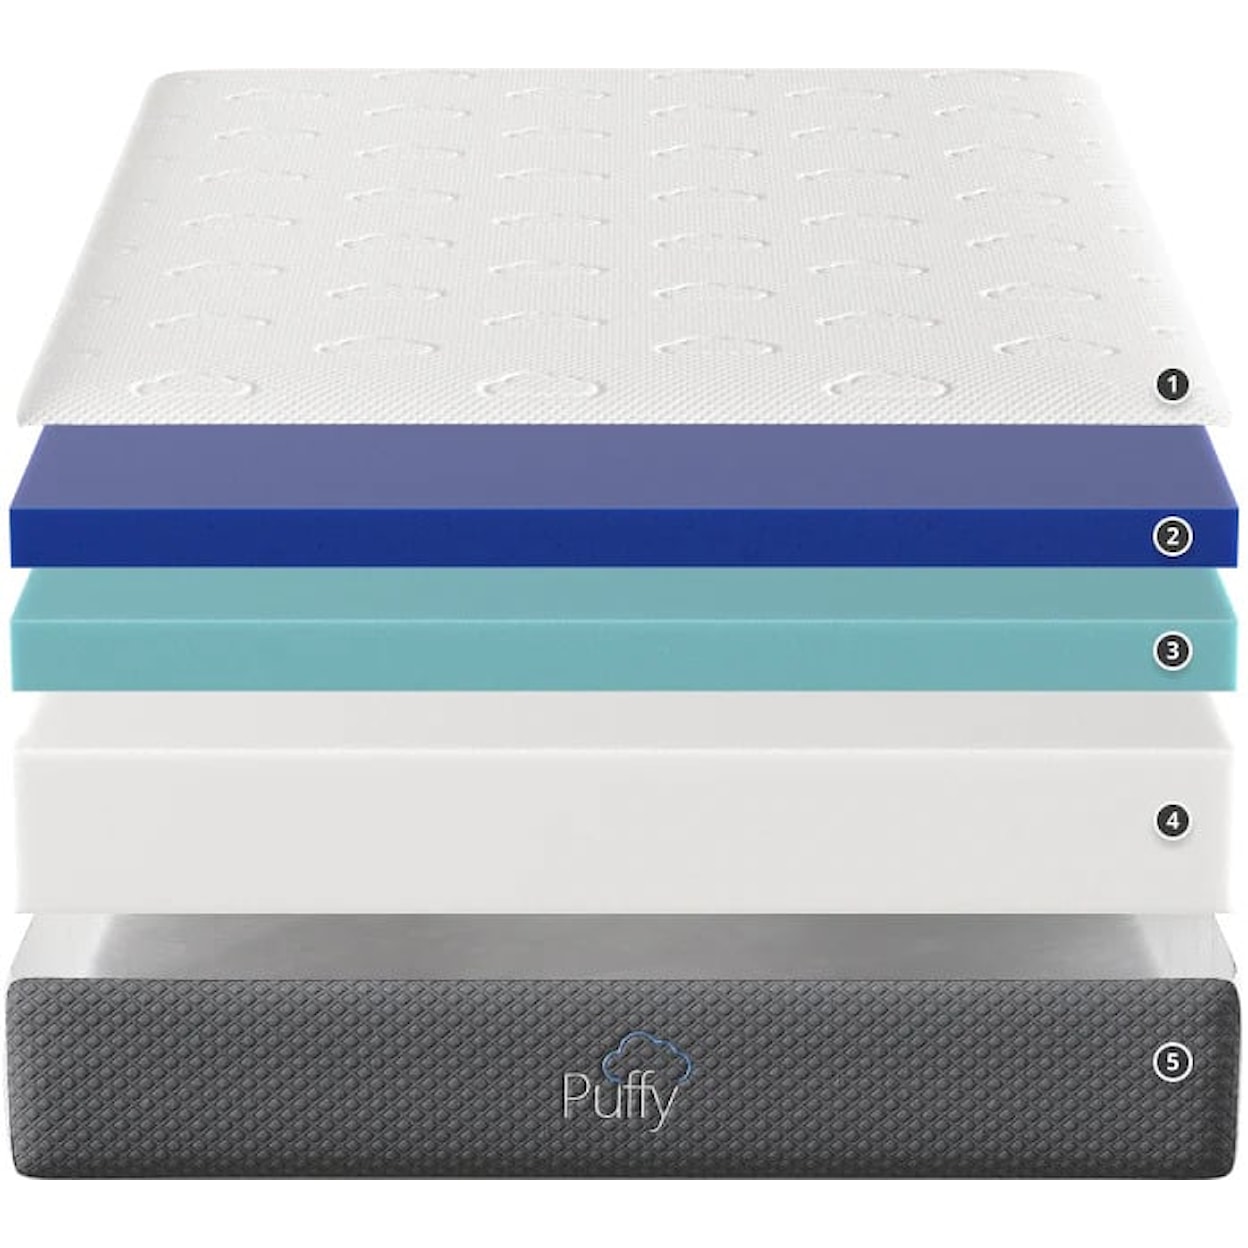 Puffy Puffy Cloud Twin XL Puffy Cloud Mattress